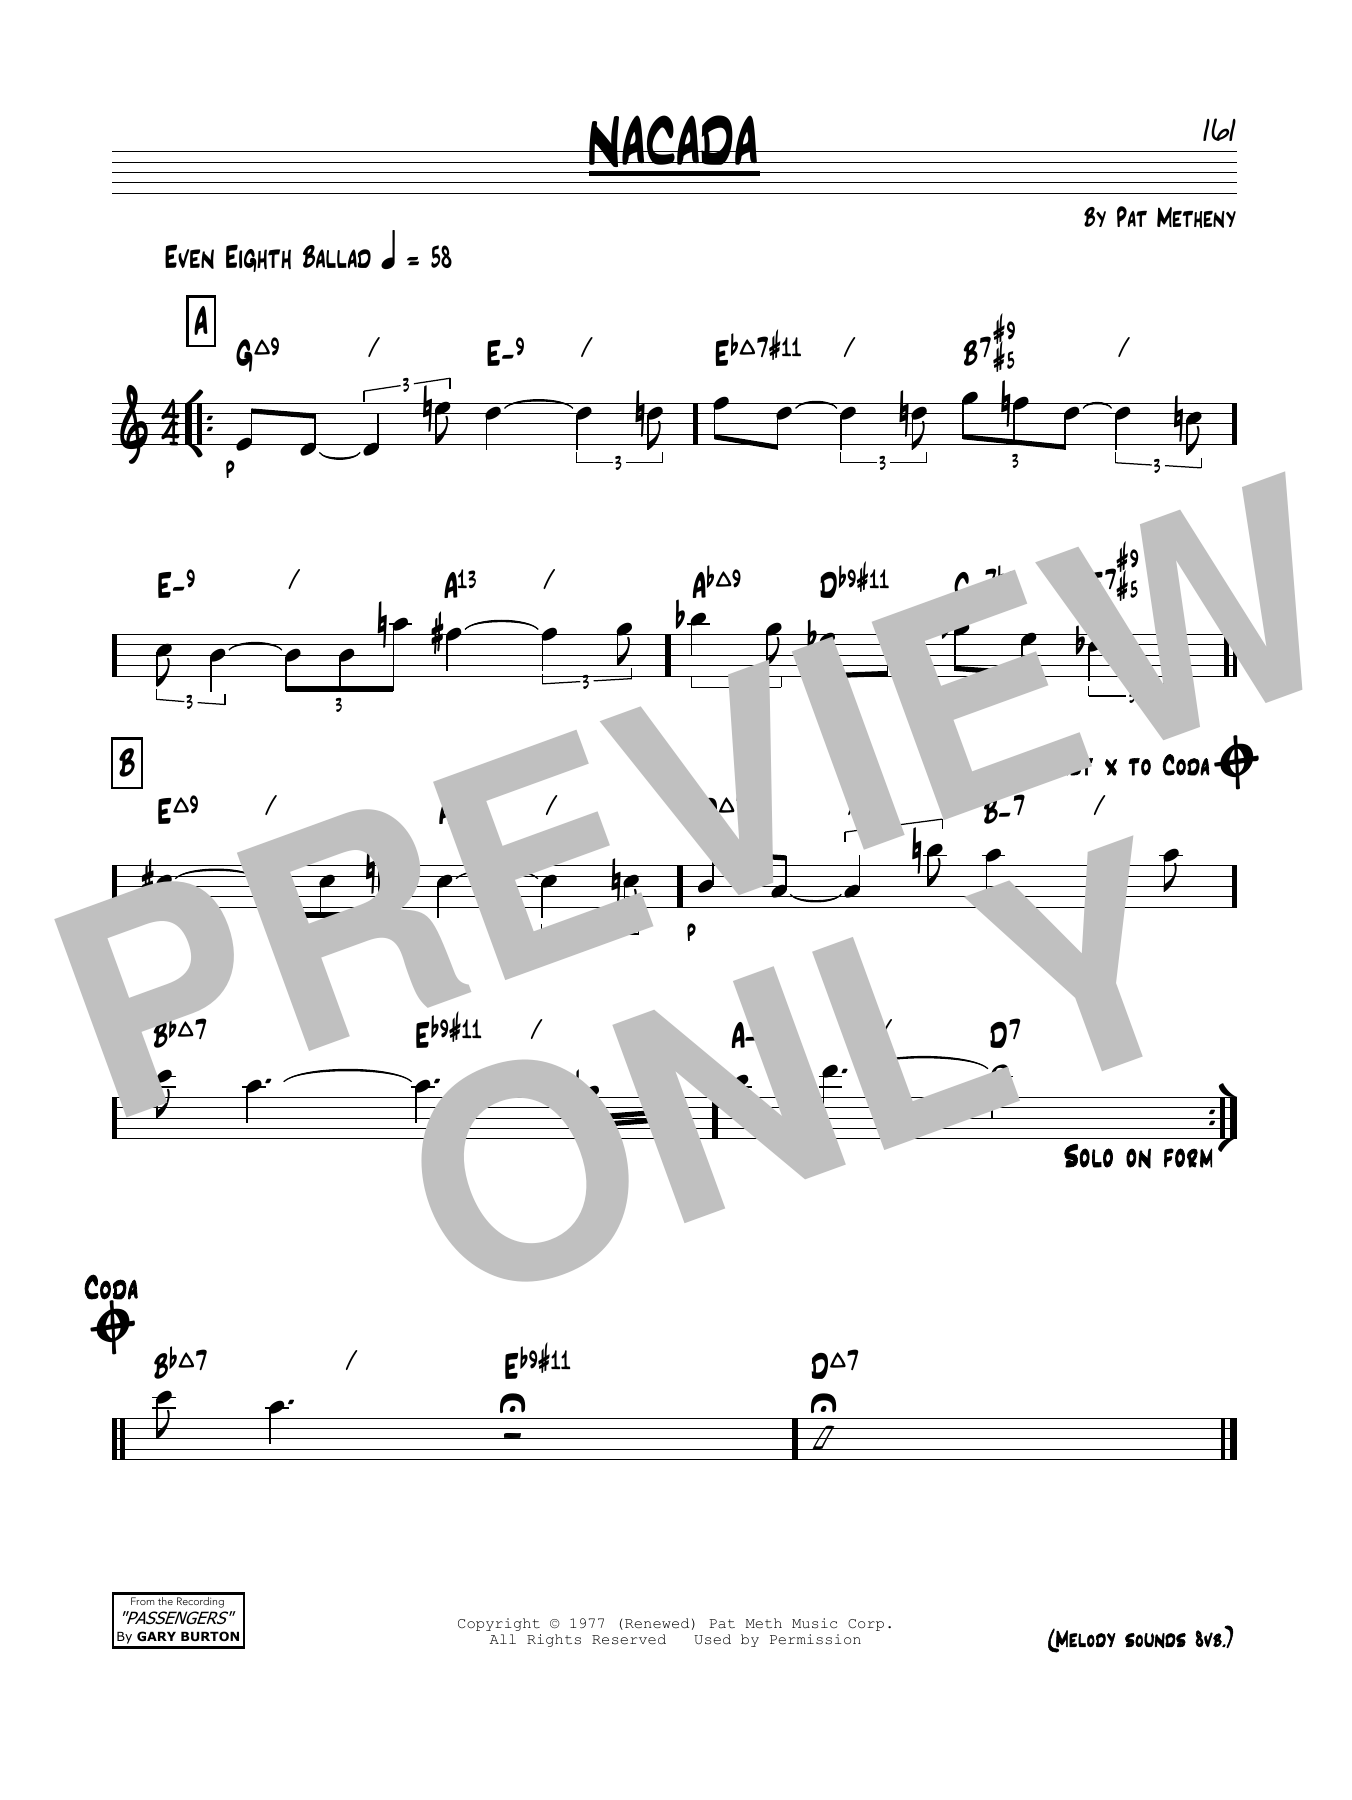 Pat Metheny Nacada Sheet Music Notes & Chords for Real Book – Melody & Chords - Download or Print PDF